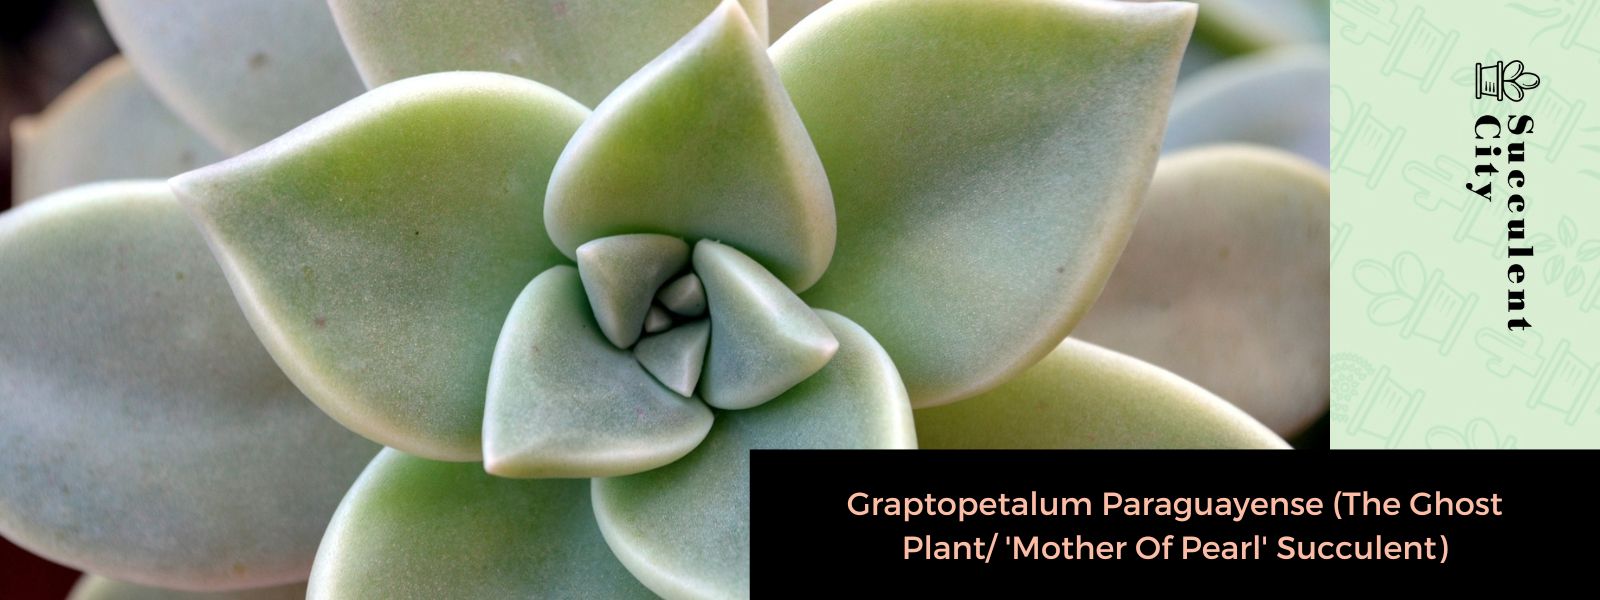 Graptopetalum Paraguayense (La Planta Fantasma/Suculenta “Madre Perla”)